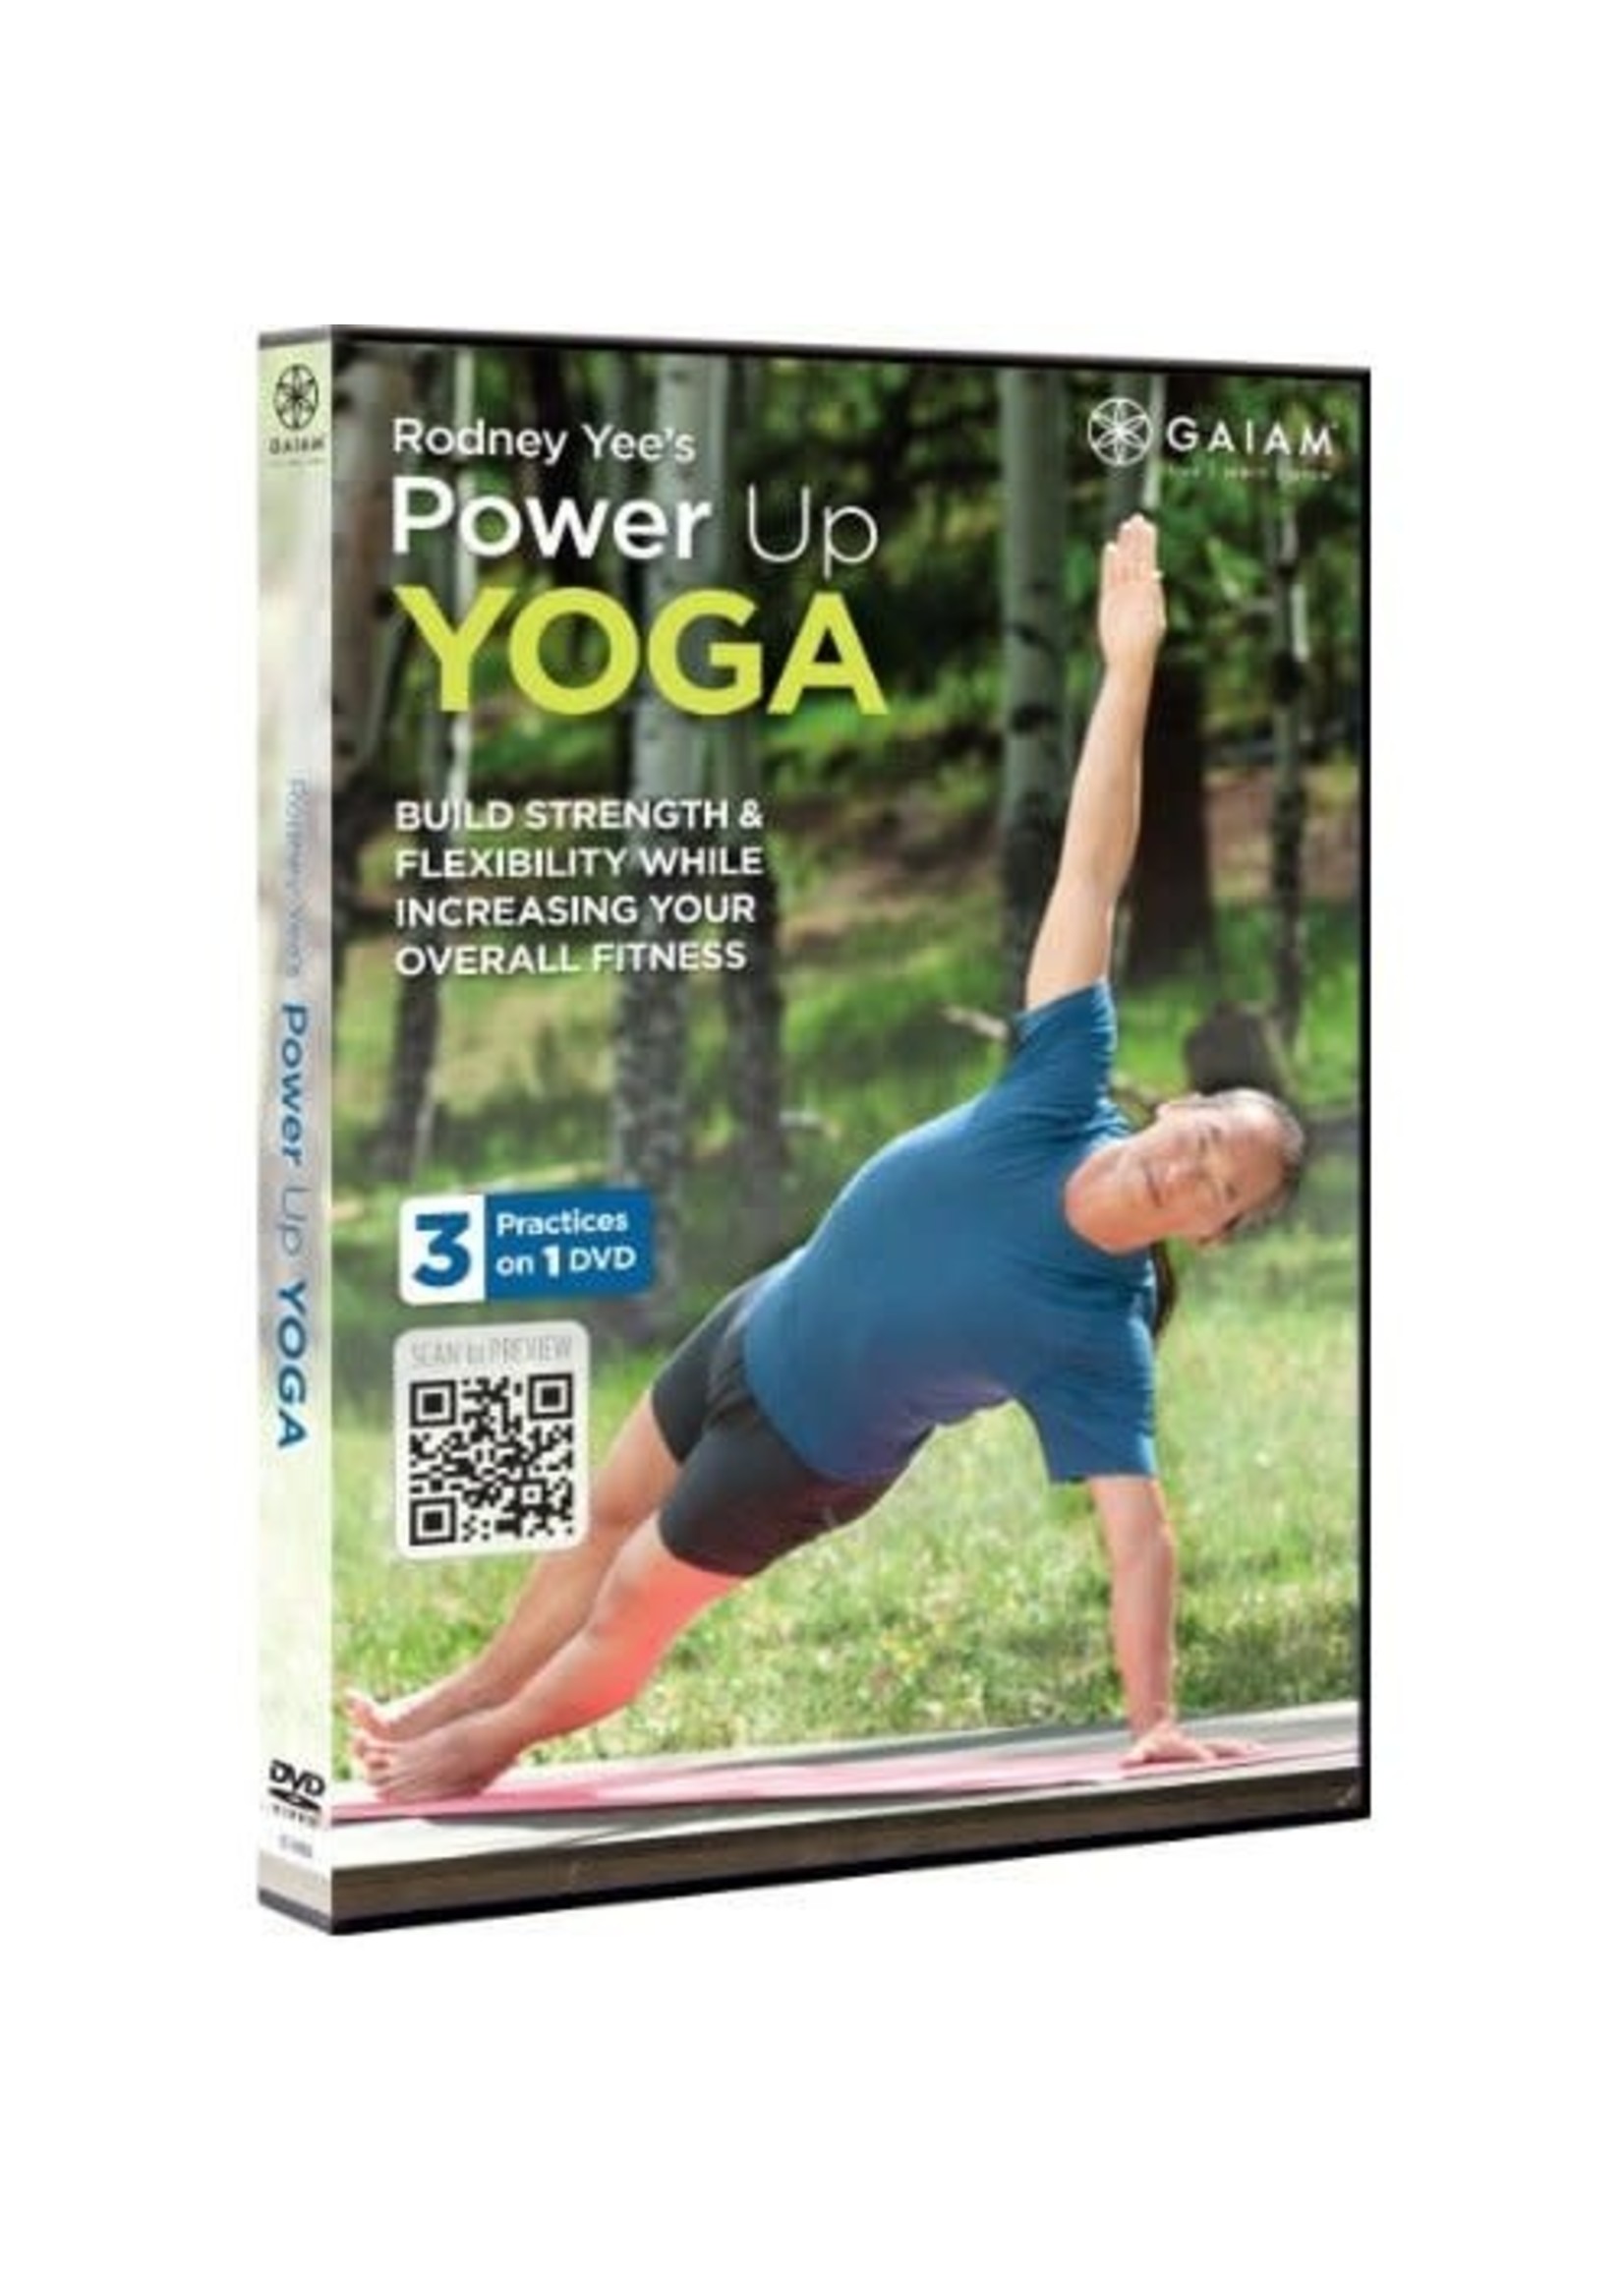 Rodney Yee's Power up Yoga